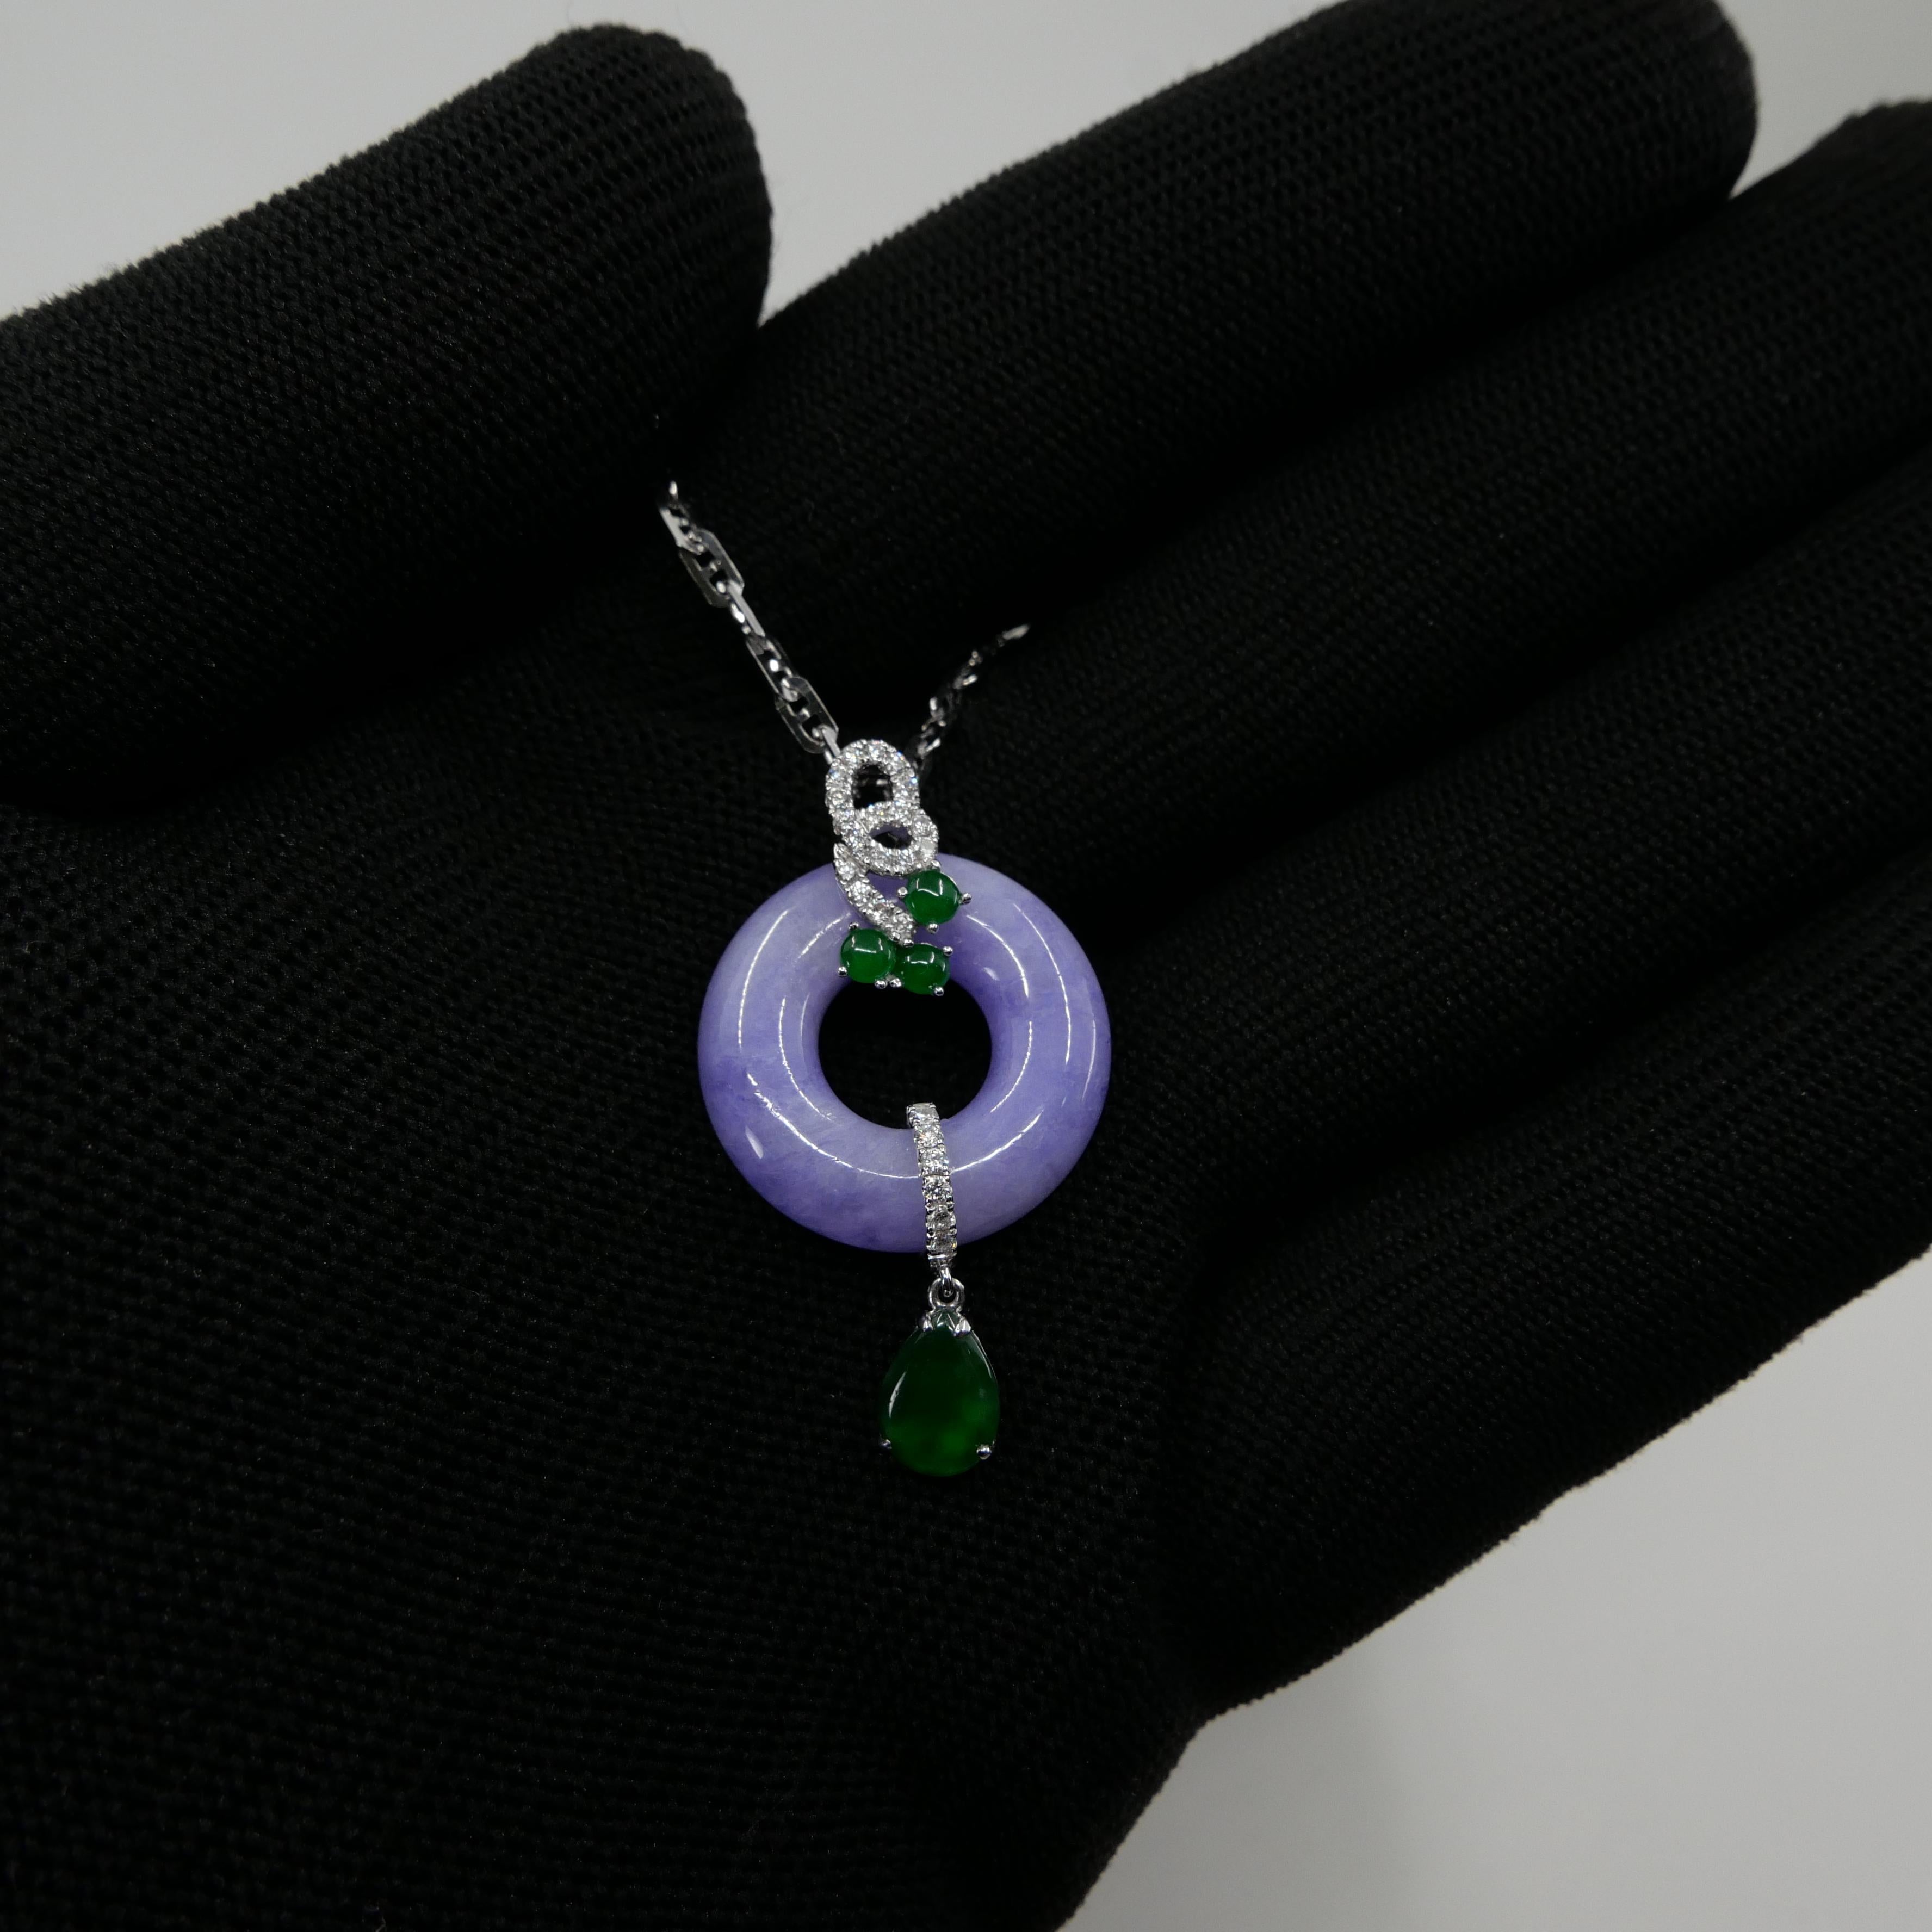 Certified Lavender & Imperial Green Jade Diamond Pendant Drop Necklace.  11